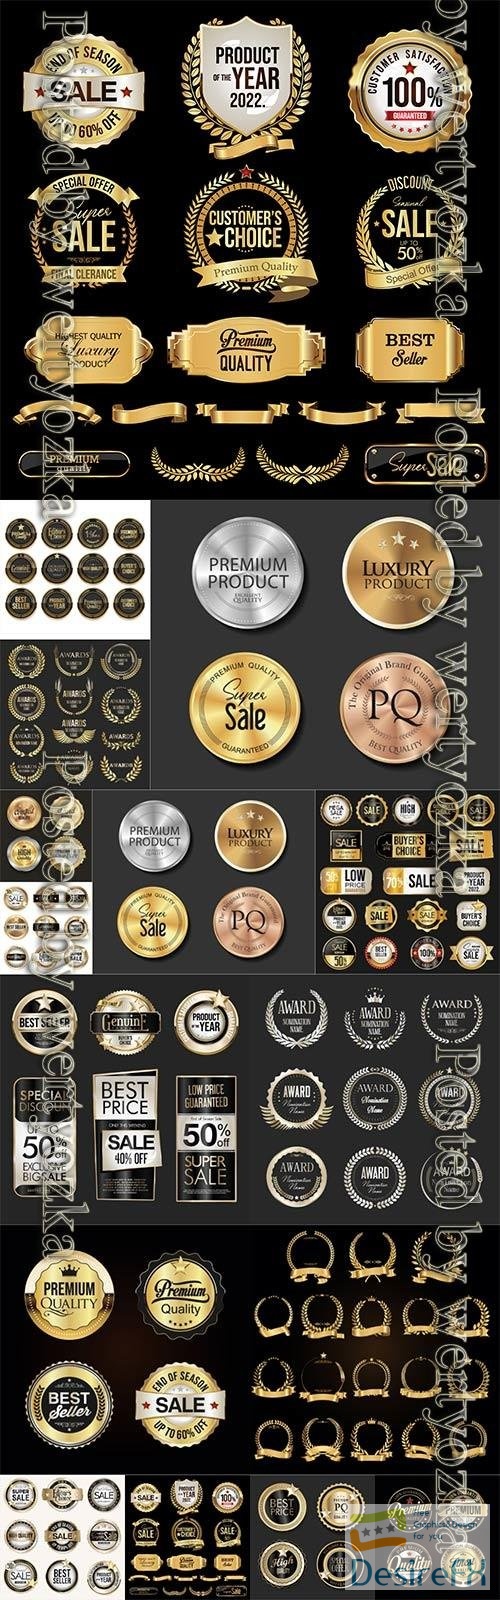 Golden badges, labels and laurels sale in vector